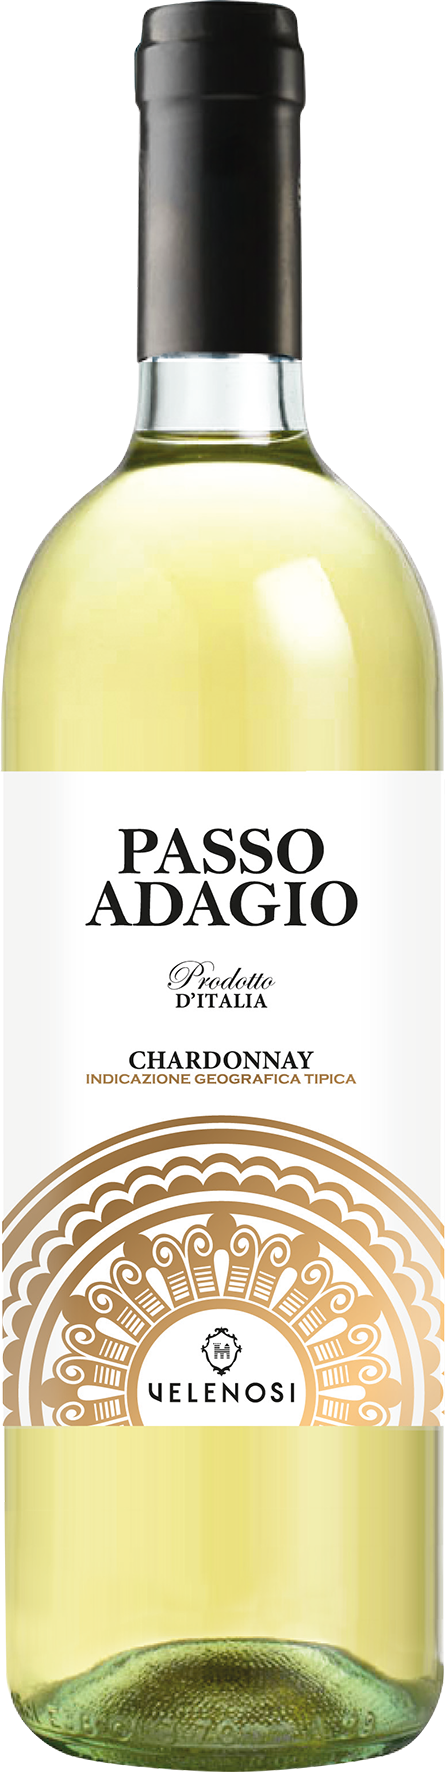 Passo Adagio Chardonnay Terre di Chieti IGT